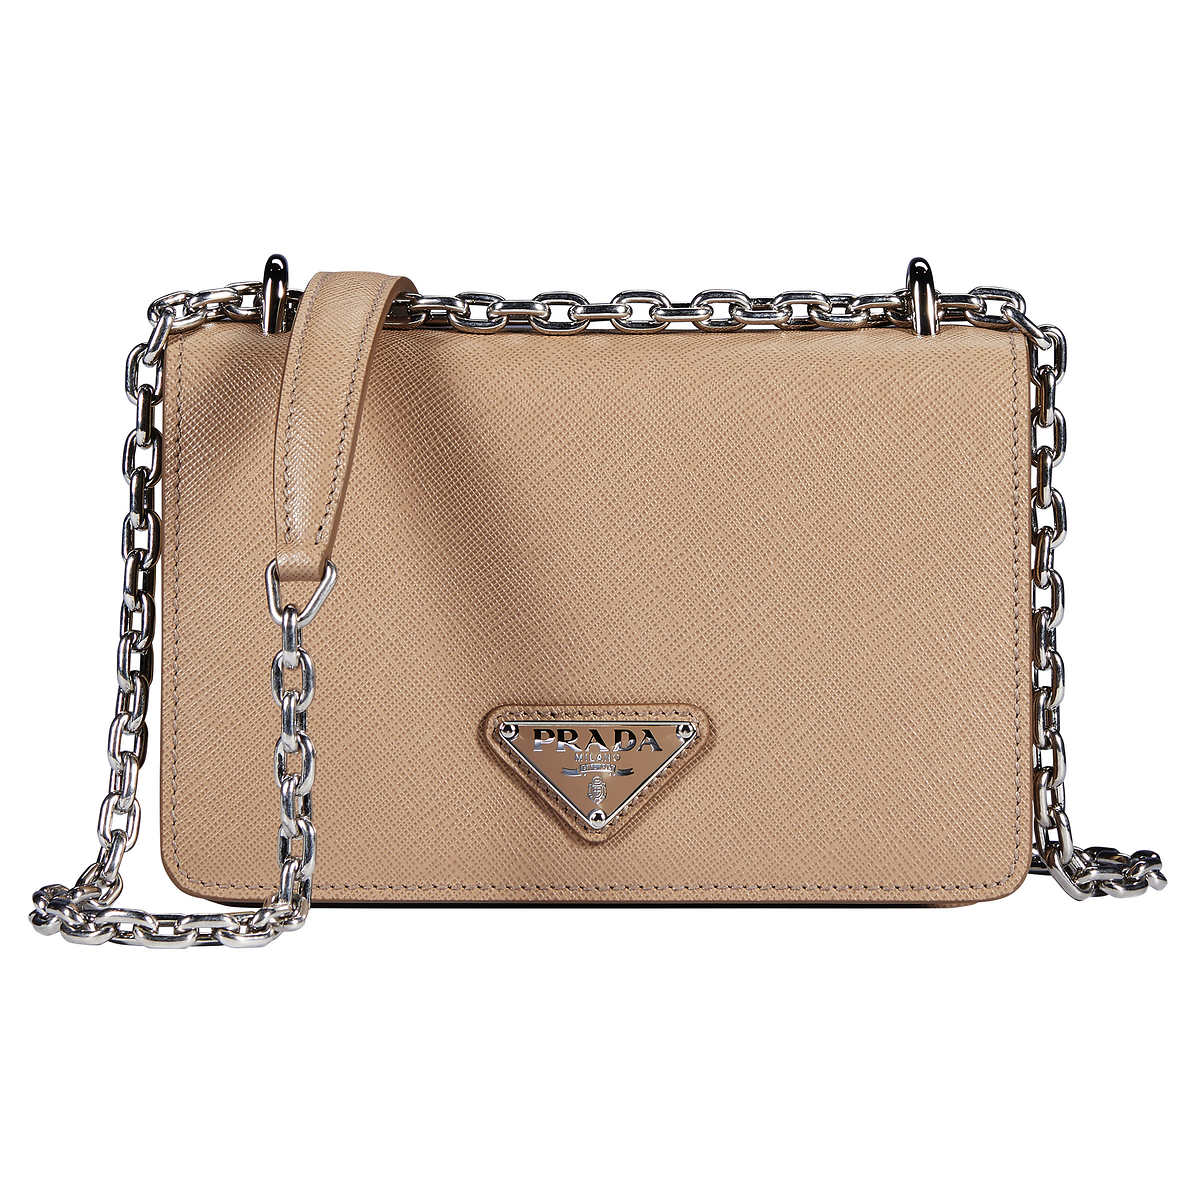 Prada Saffiano Handbag Rose Beige in Calfskin Leather with Gold-tone - US